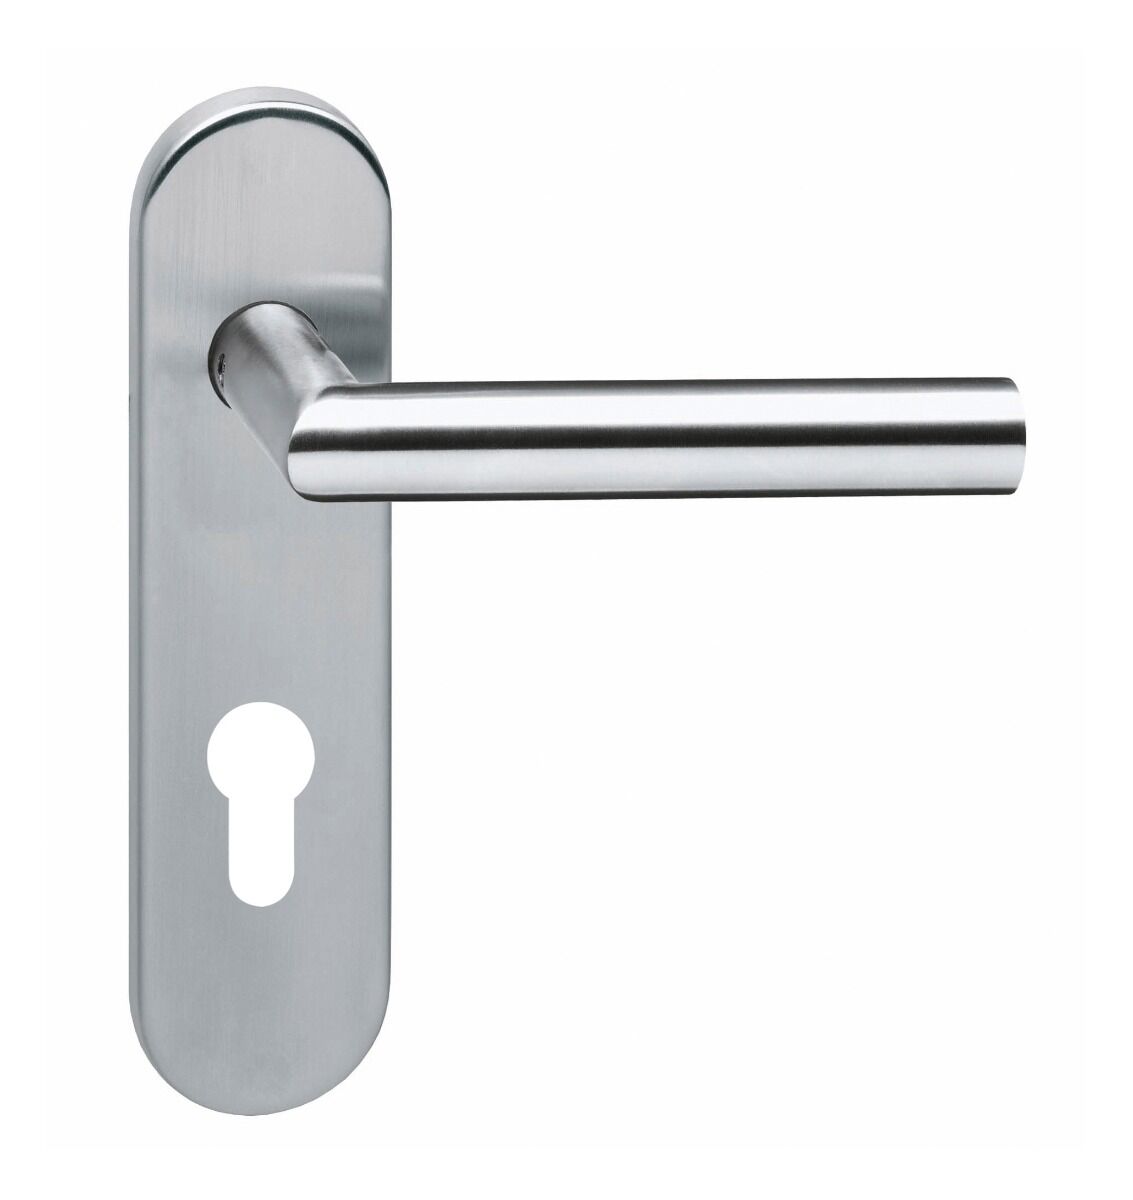 Intersteel Security fittings, corner door handle, on shield, stainless steel